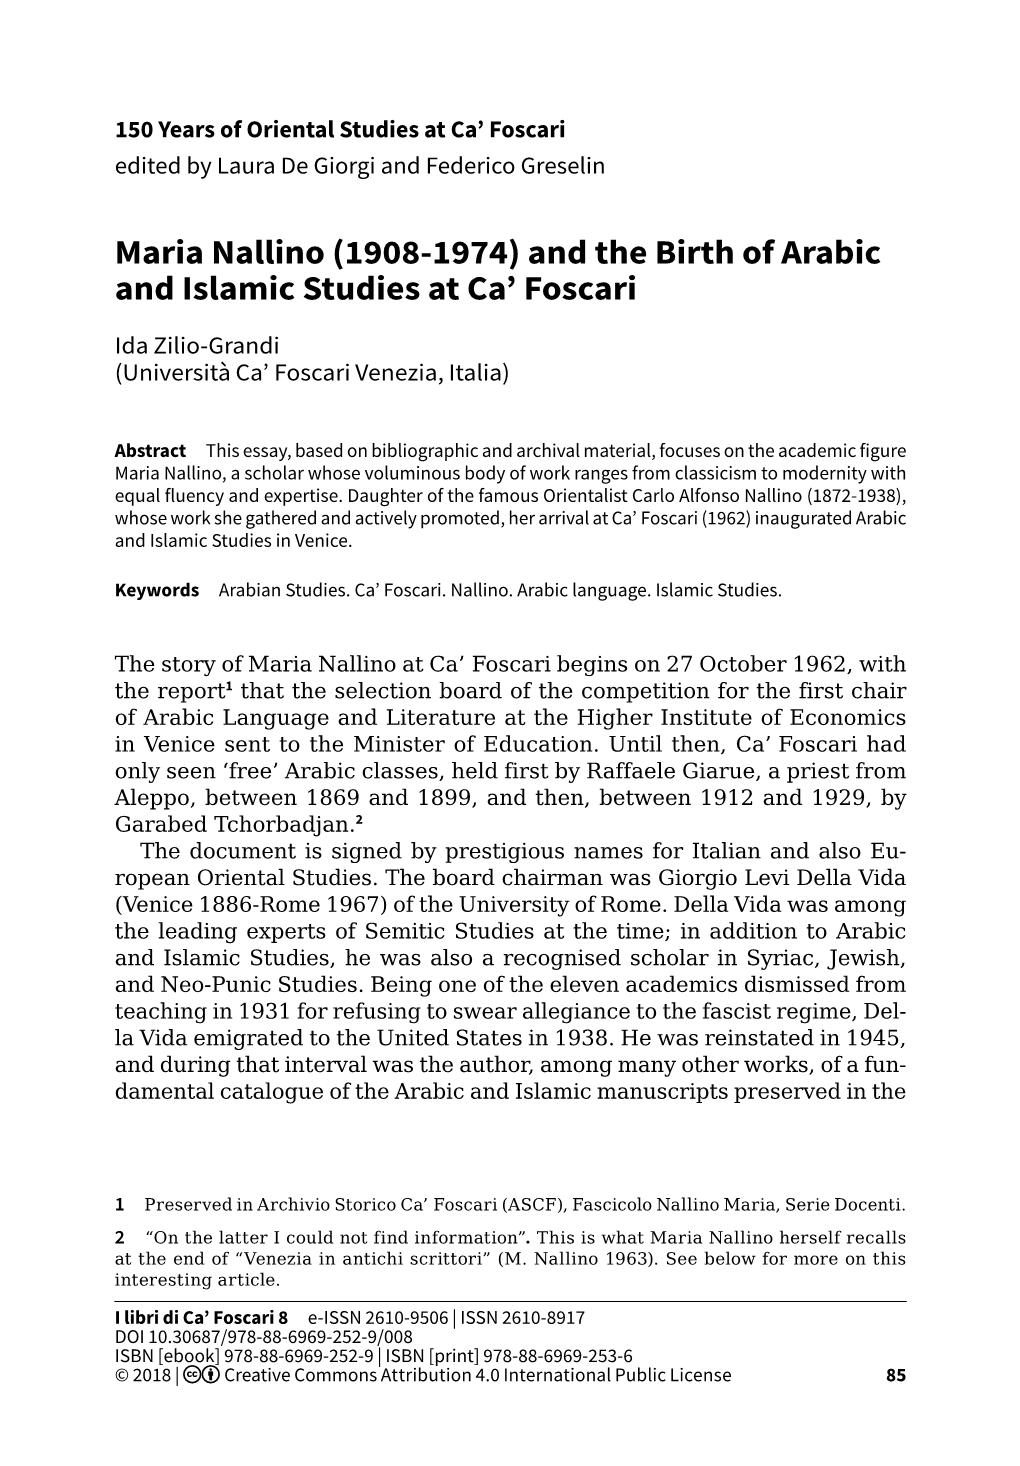 Maria Nallino (1908-1974) and the Birth of Arabic and Islamic Studies at Ca’ Foscari